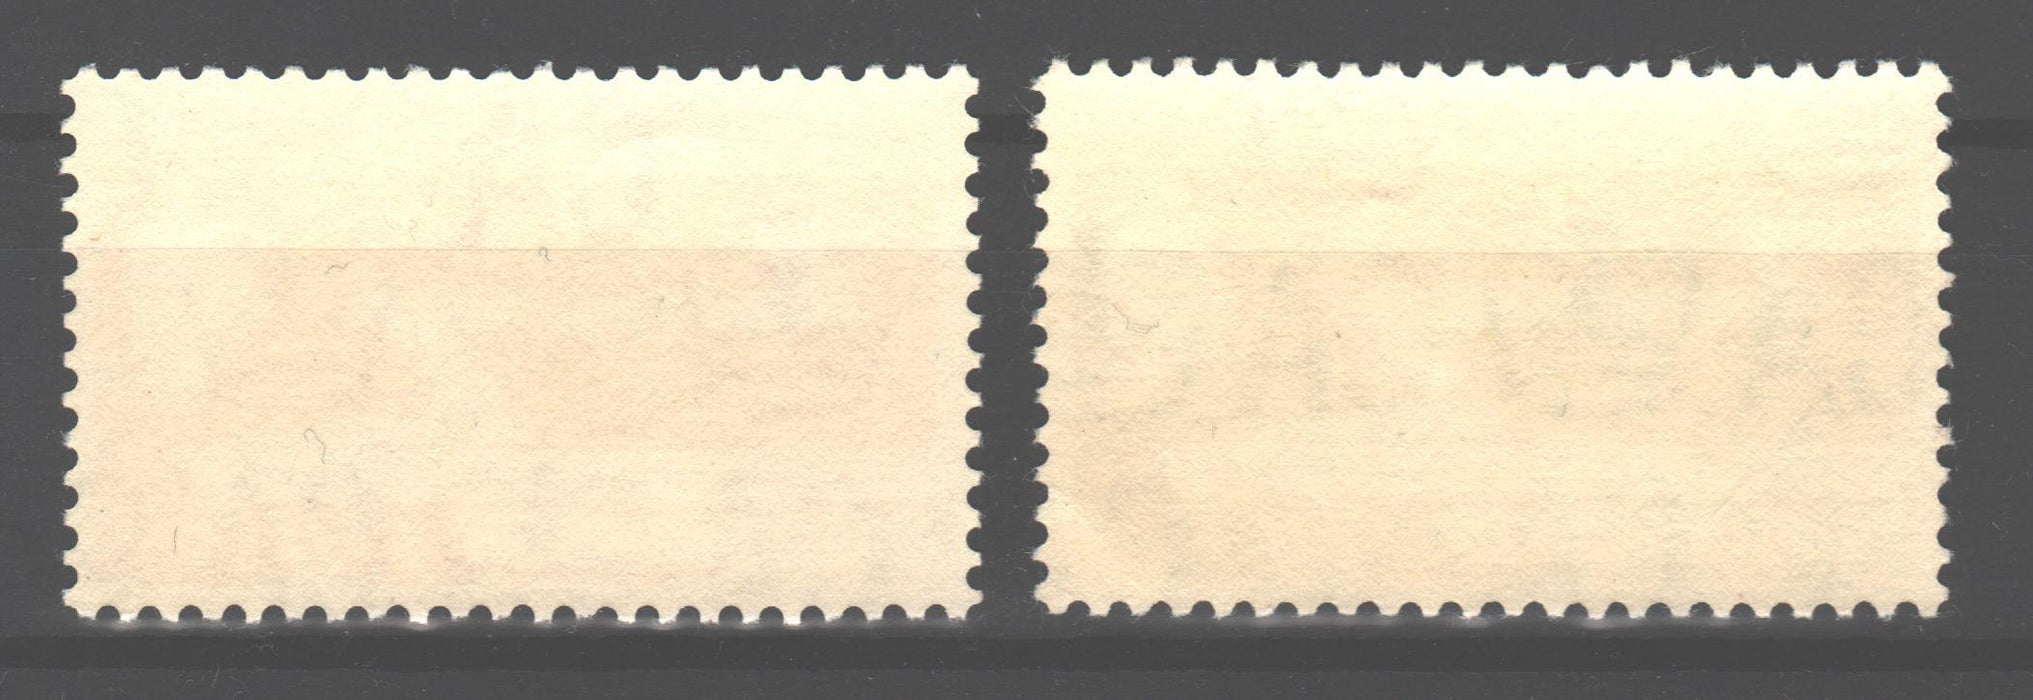 St. Vincent 1965 ITU Issue Scott #224-225 c.v. 0.80$ - (TIP A)-Stamps Mall